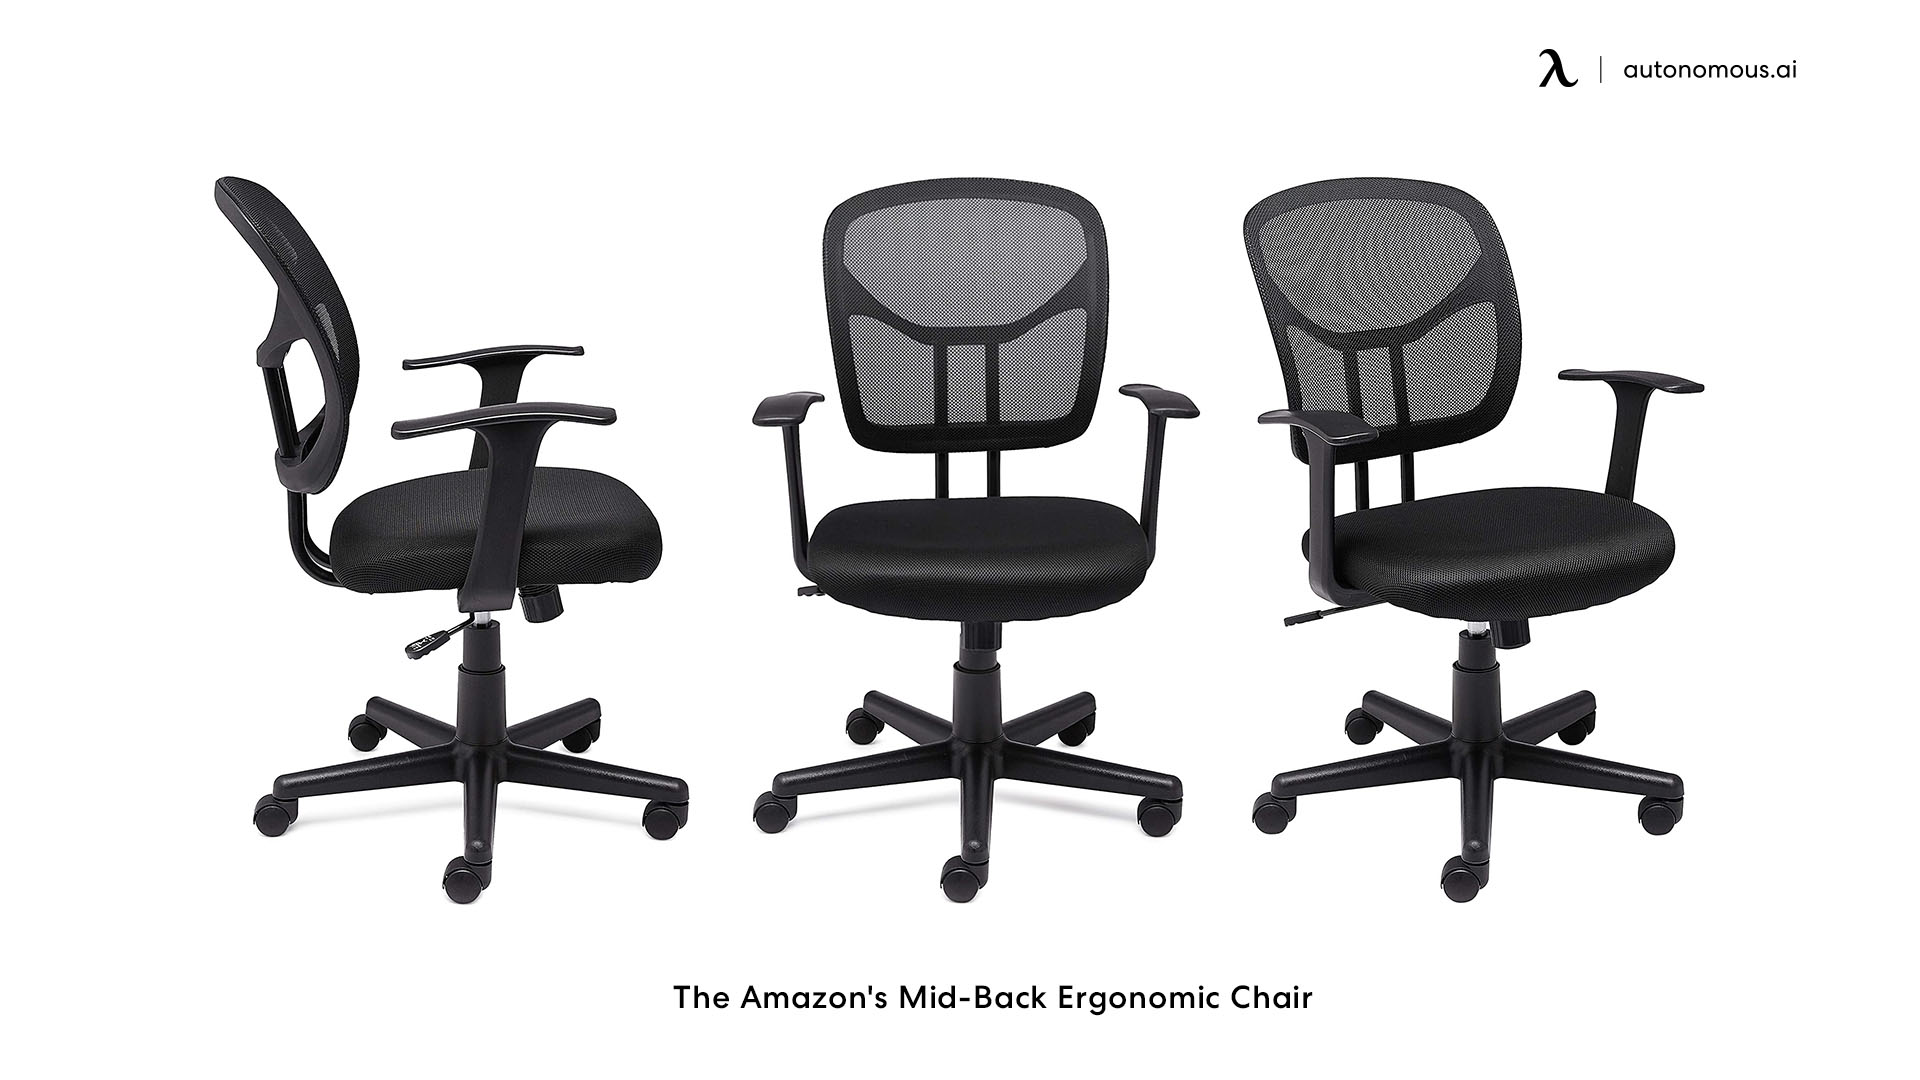 The Amazon's Mid-Back Ergonomic Chair